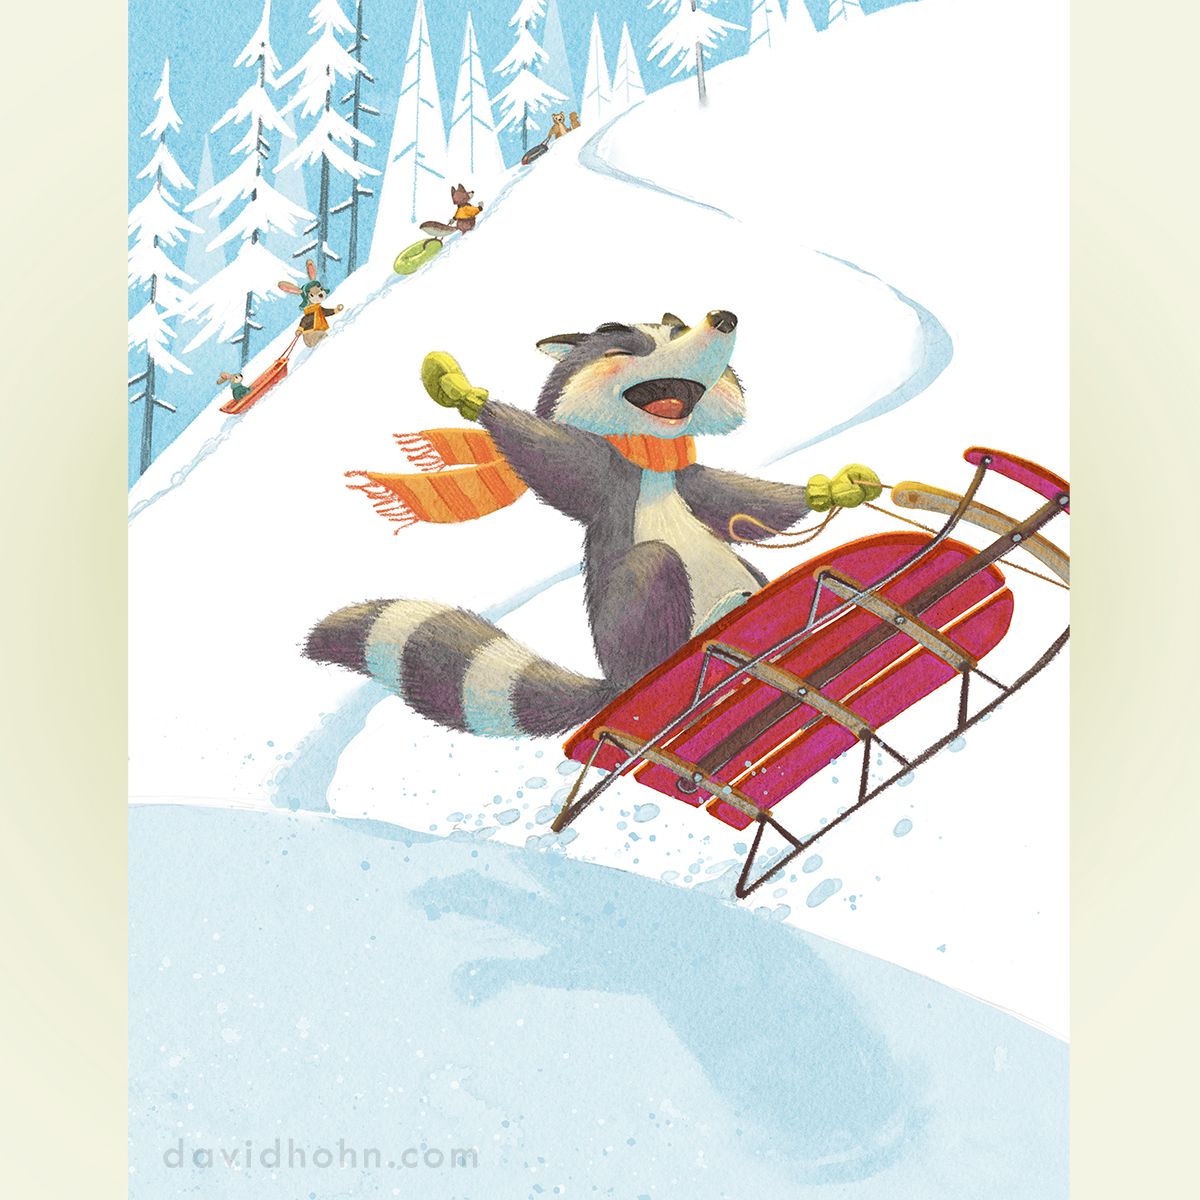 Sledding season is here!
🛷❄️✊
#kidlitart #sledding #snowfun #characterart #picturebook